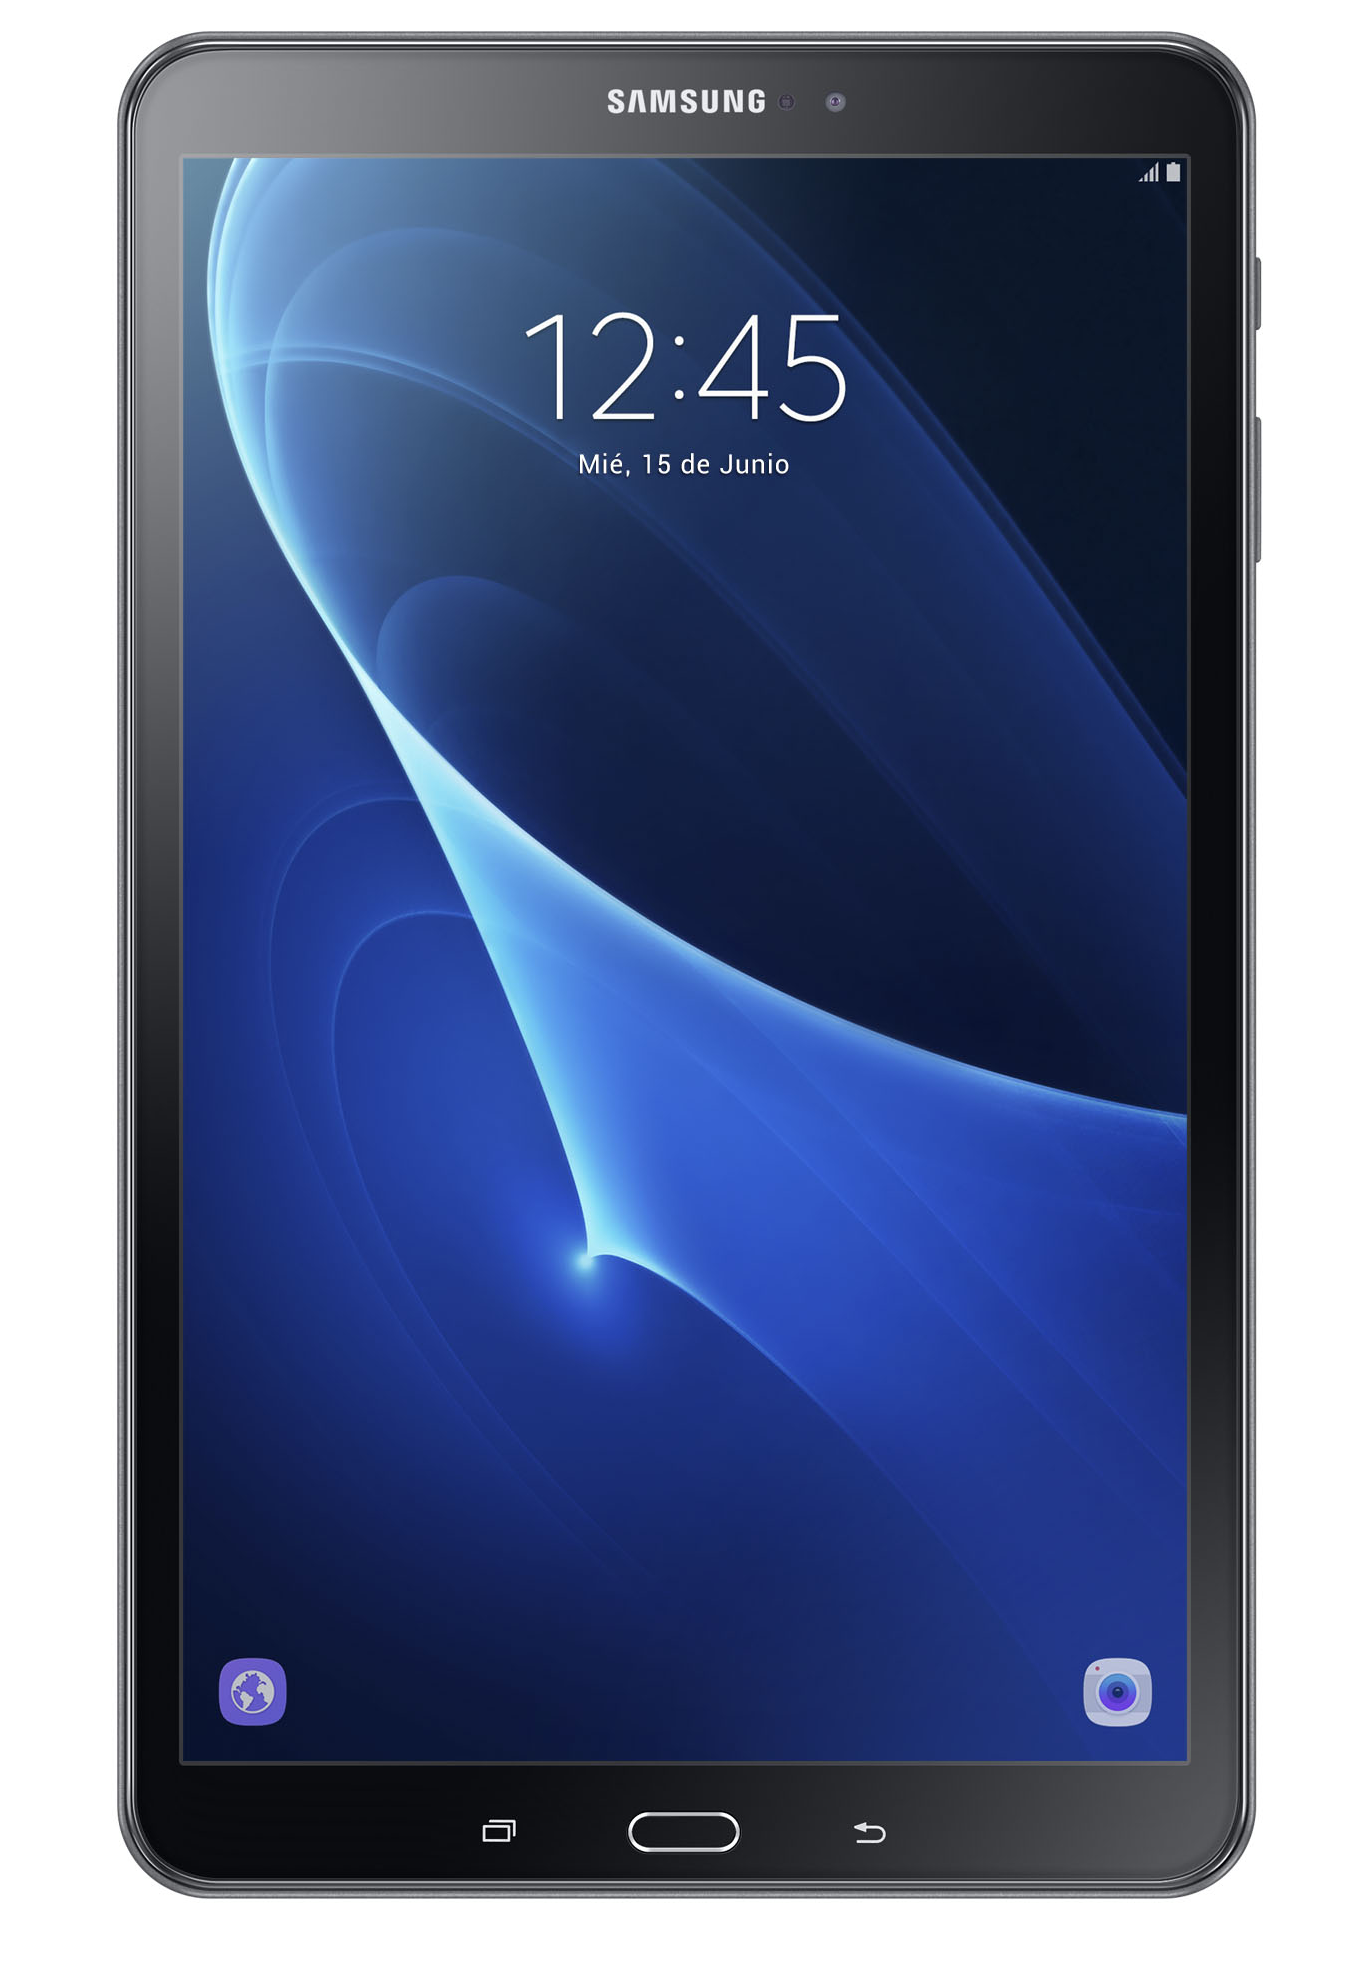 Tablet Samsung Galaxy tab 2016 2565 cm 101 wifi 16 gb negra 2gb ram 16gb 10 t580 10.1 smt580 cortexa53 2 32 6.0